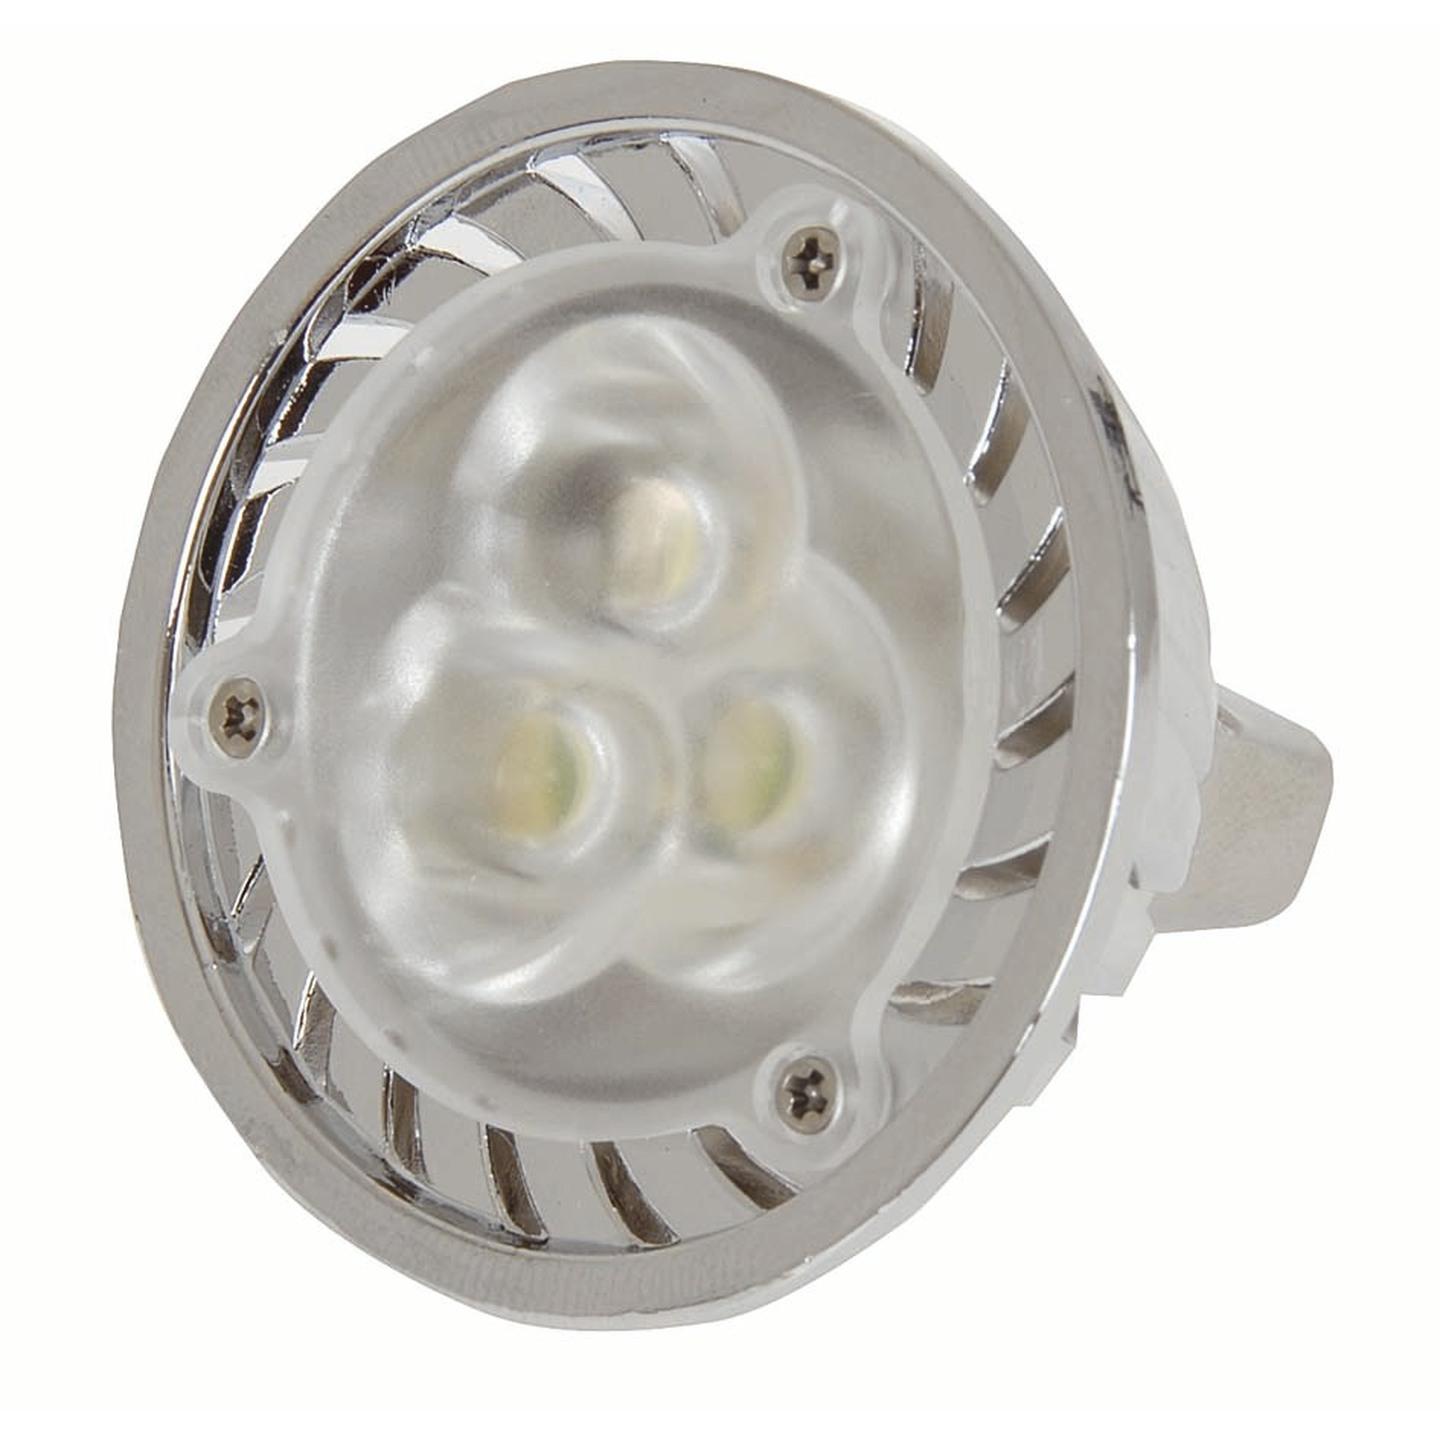 MR-16 Cree XR-E LED Replacement Lamp White 3 Watt